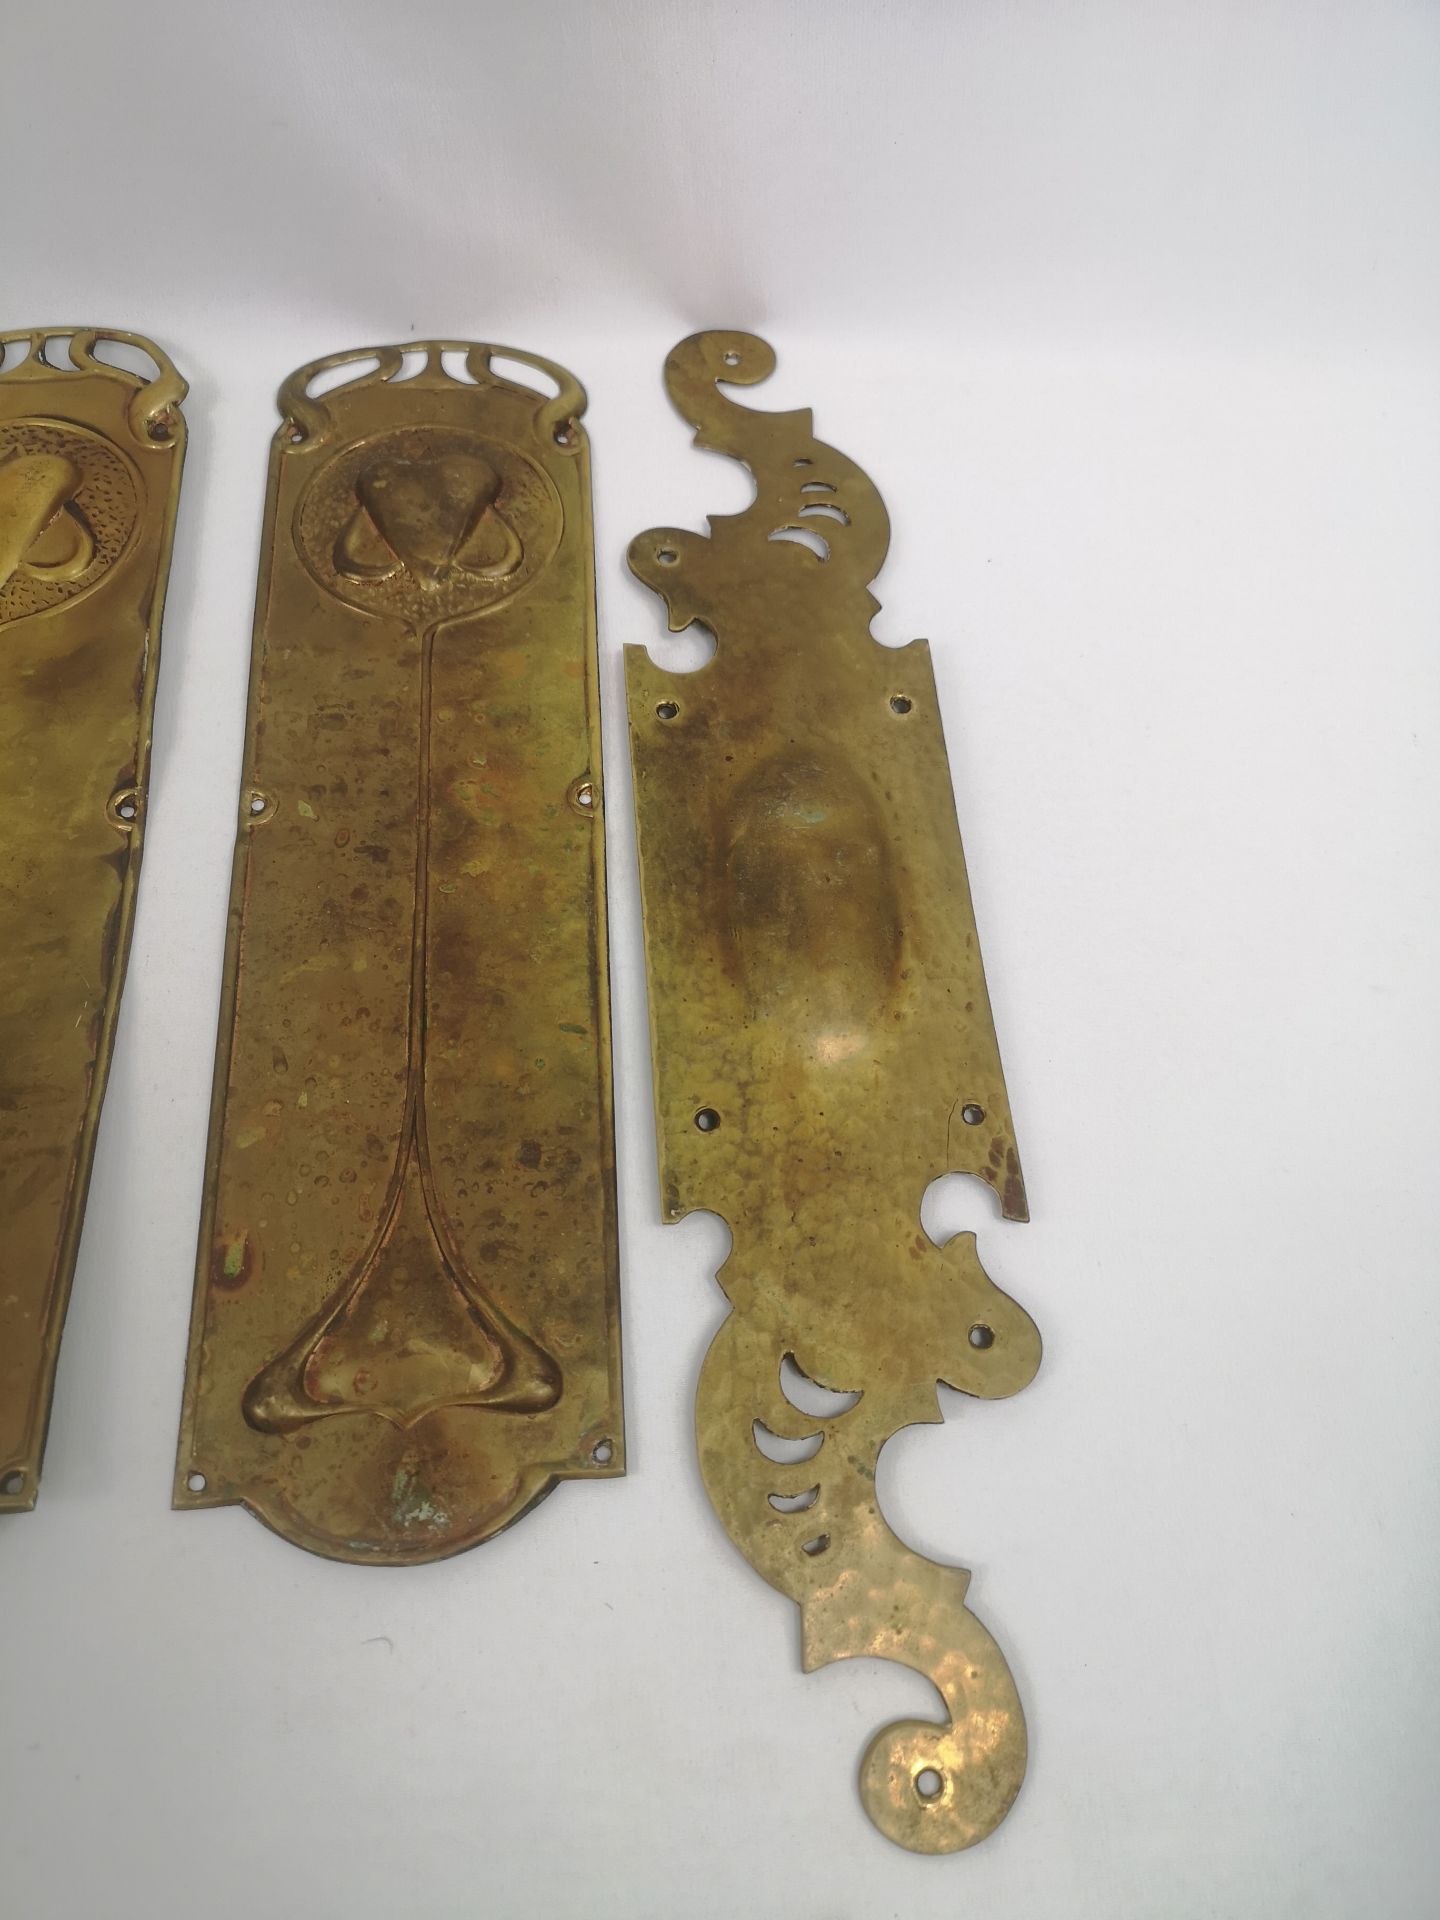 Six art nouveau style brass door plates - Image 4 of 4